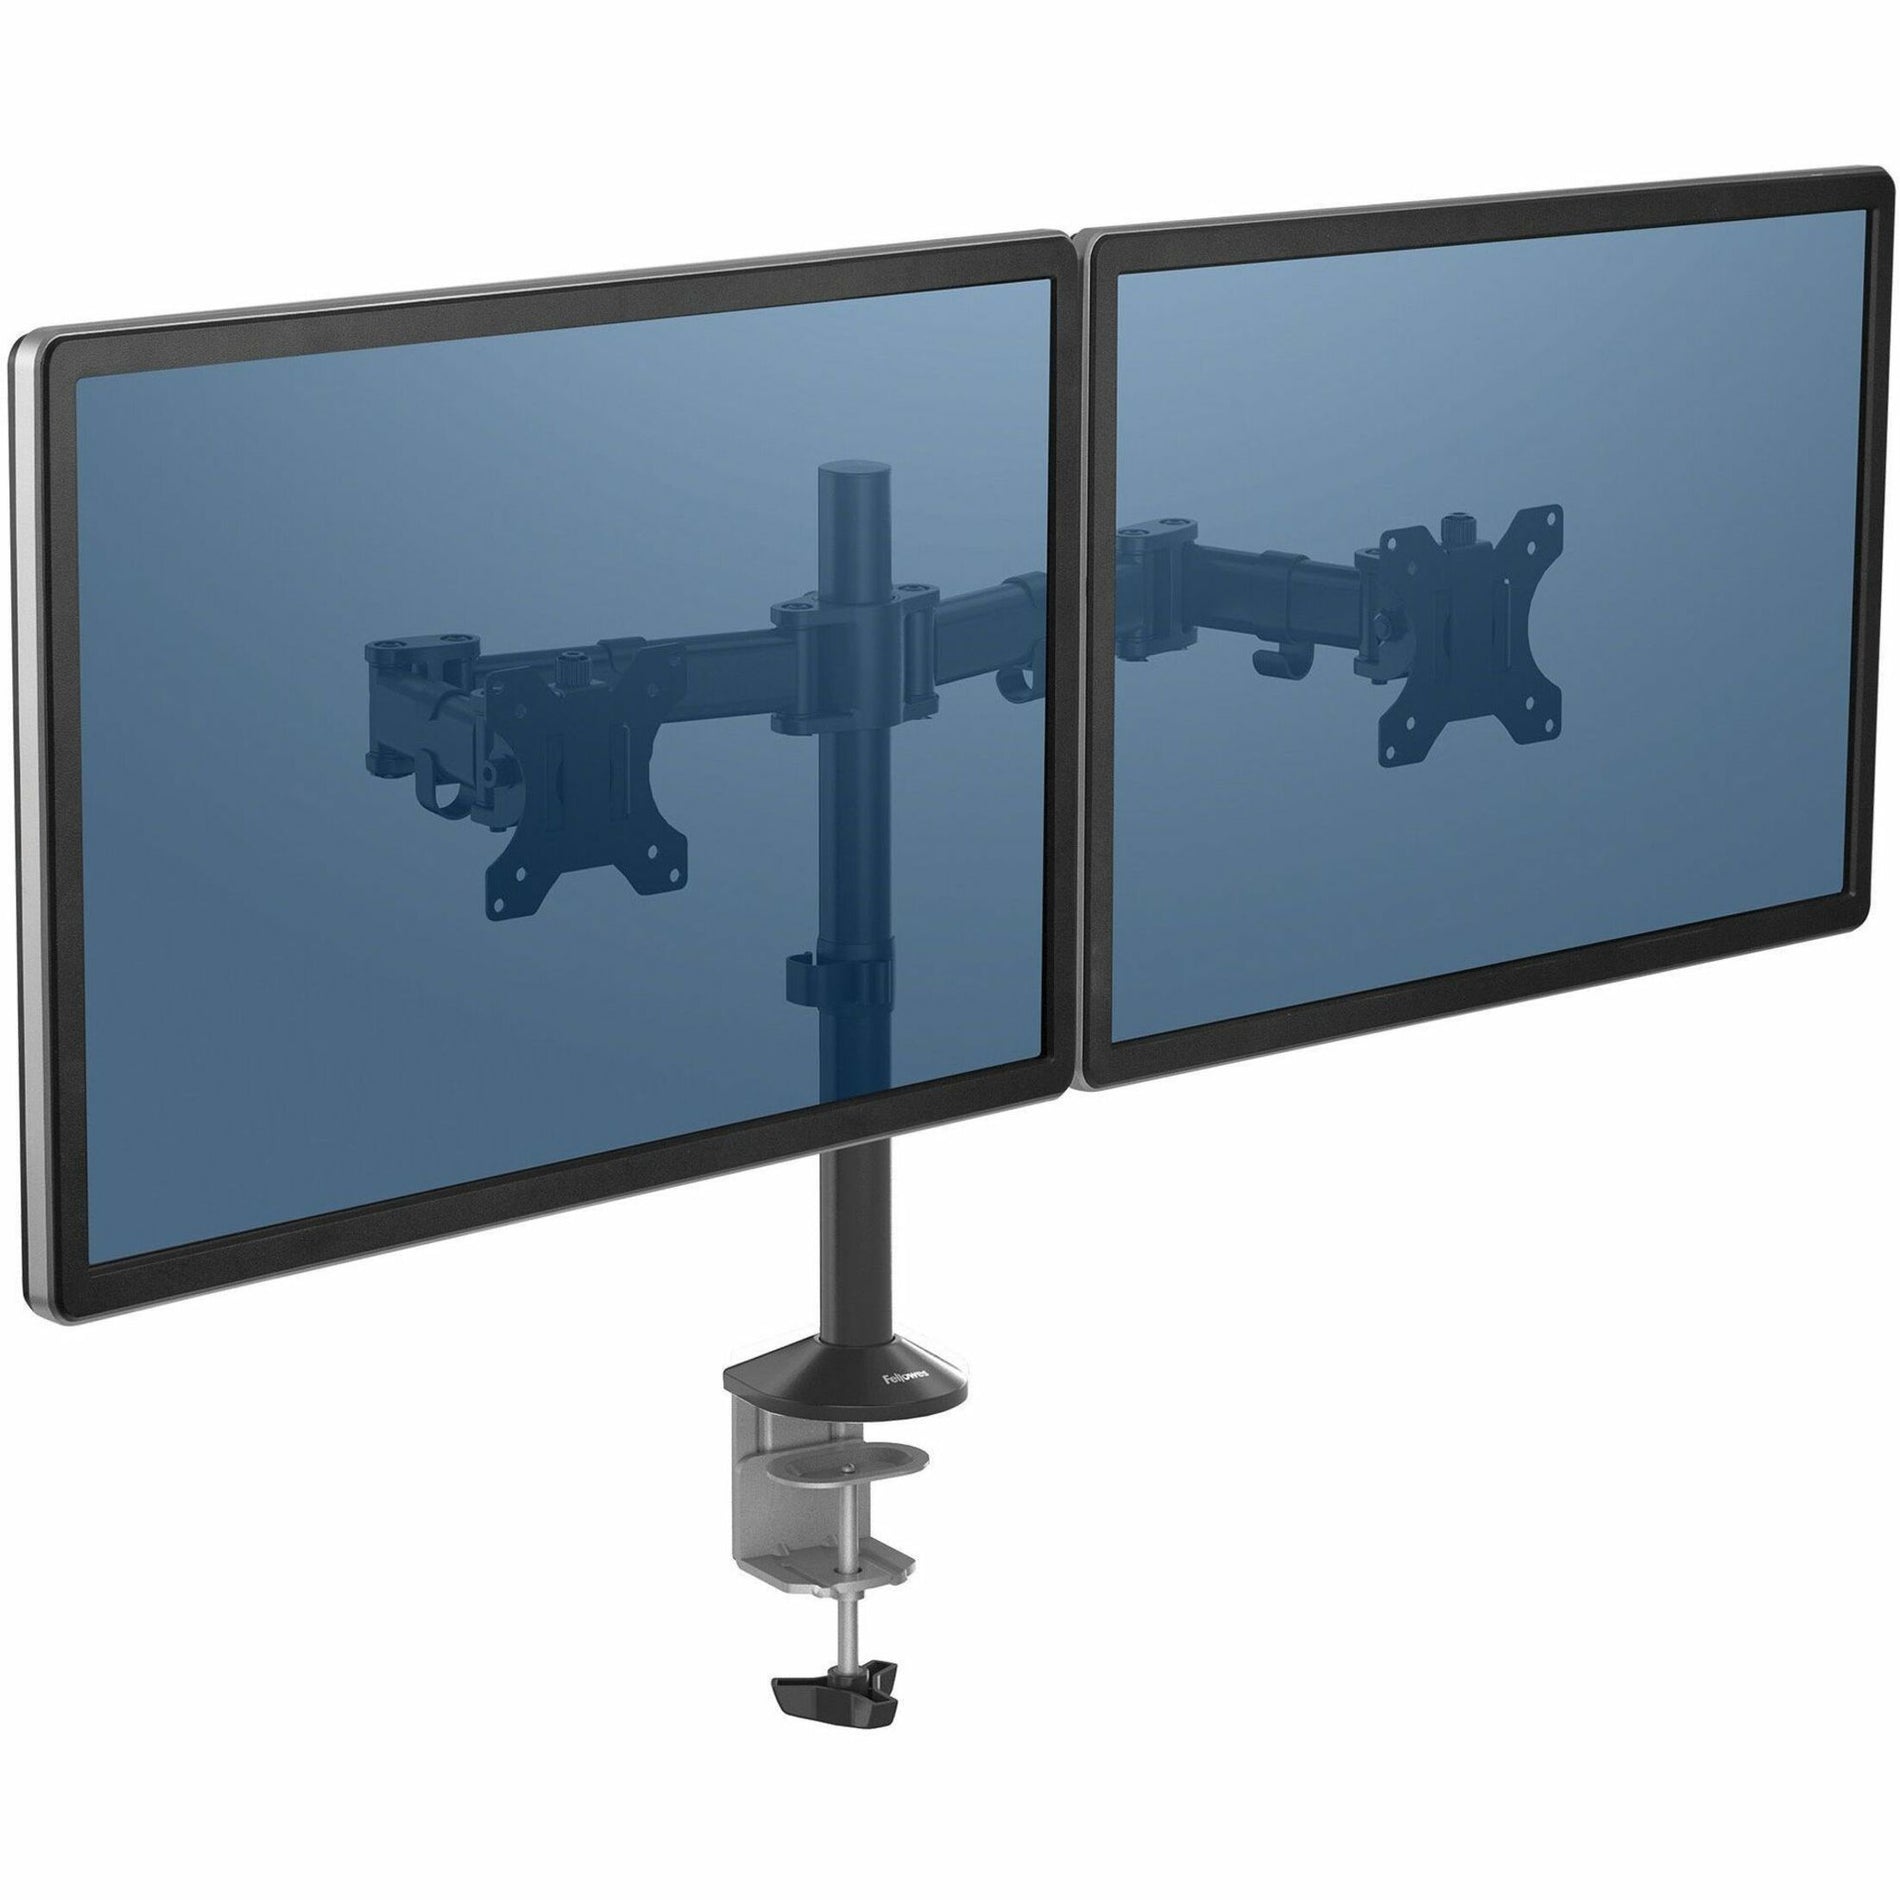 Fellowes 8502601 Reflex Dual Monitor Arm, Desk Mount, Supports 2 Monitors, 48 lb Maximum Load Capacity